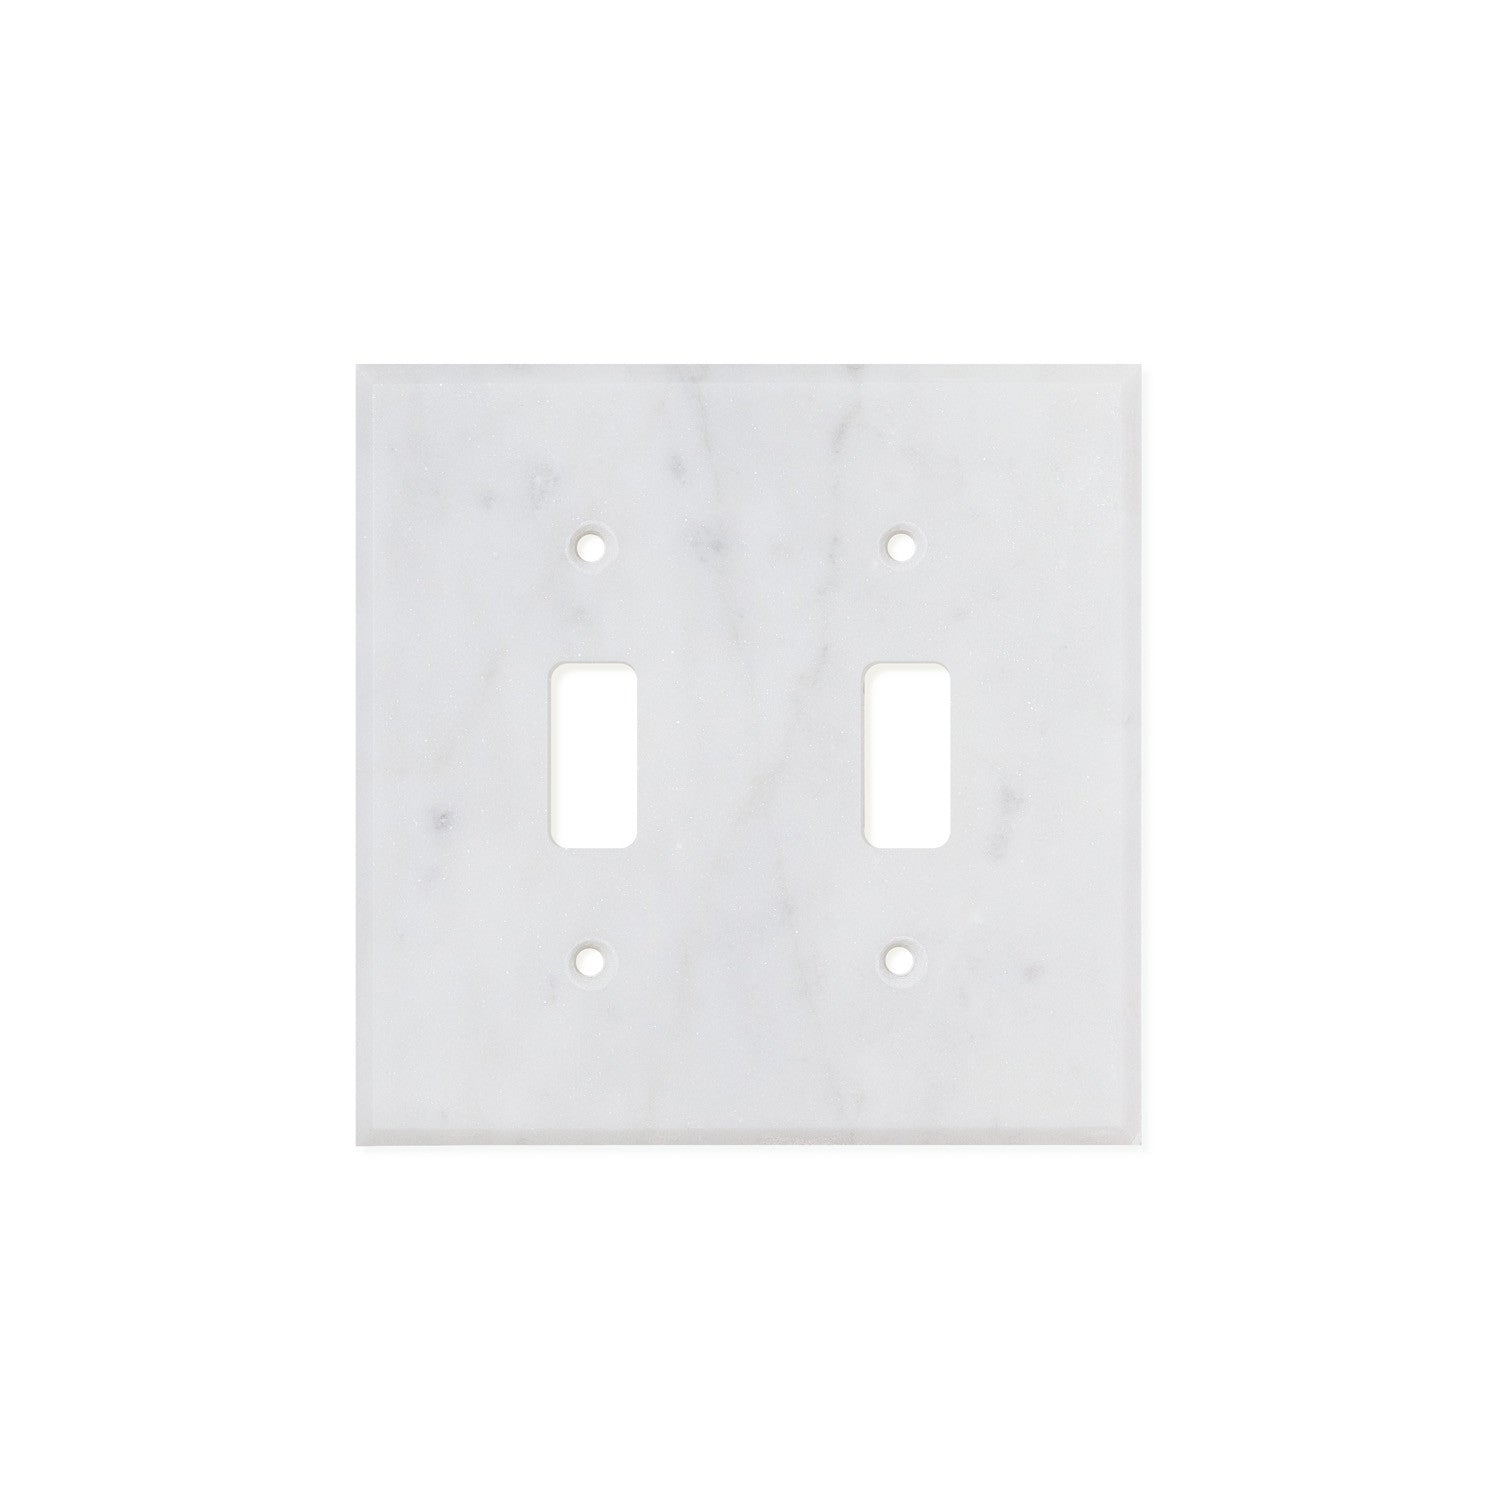 Bianco Carrara (Carrara White) Marble Switch Plate Cover, Polished (2 TOGGLE) - Tilephile